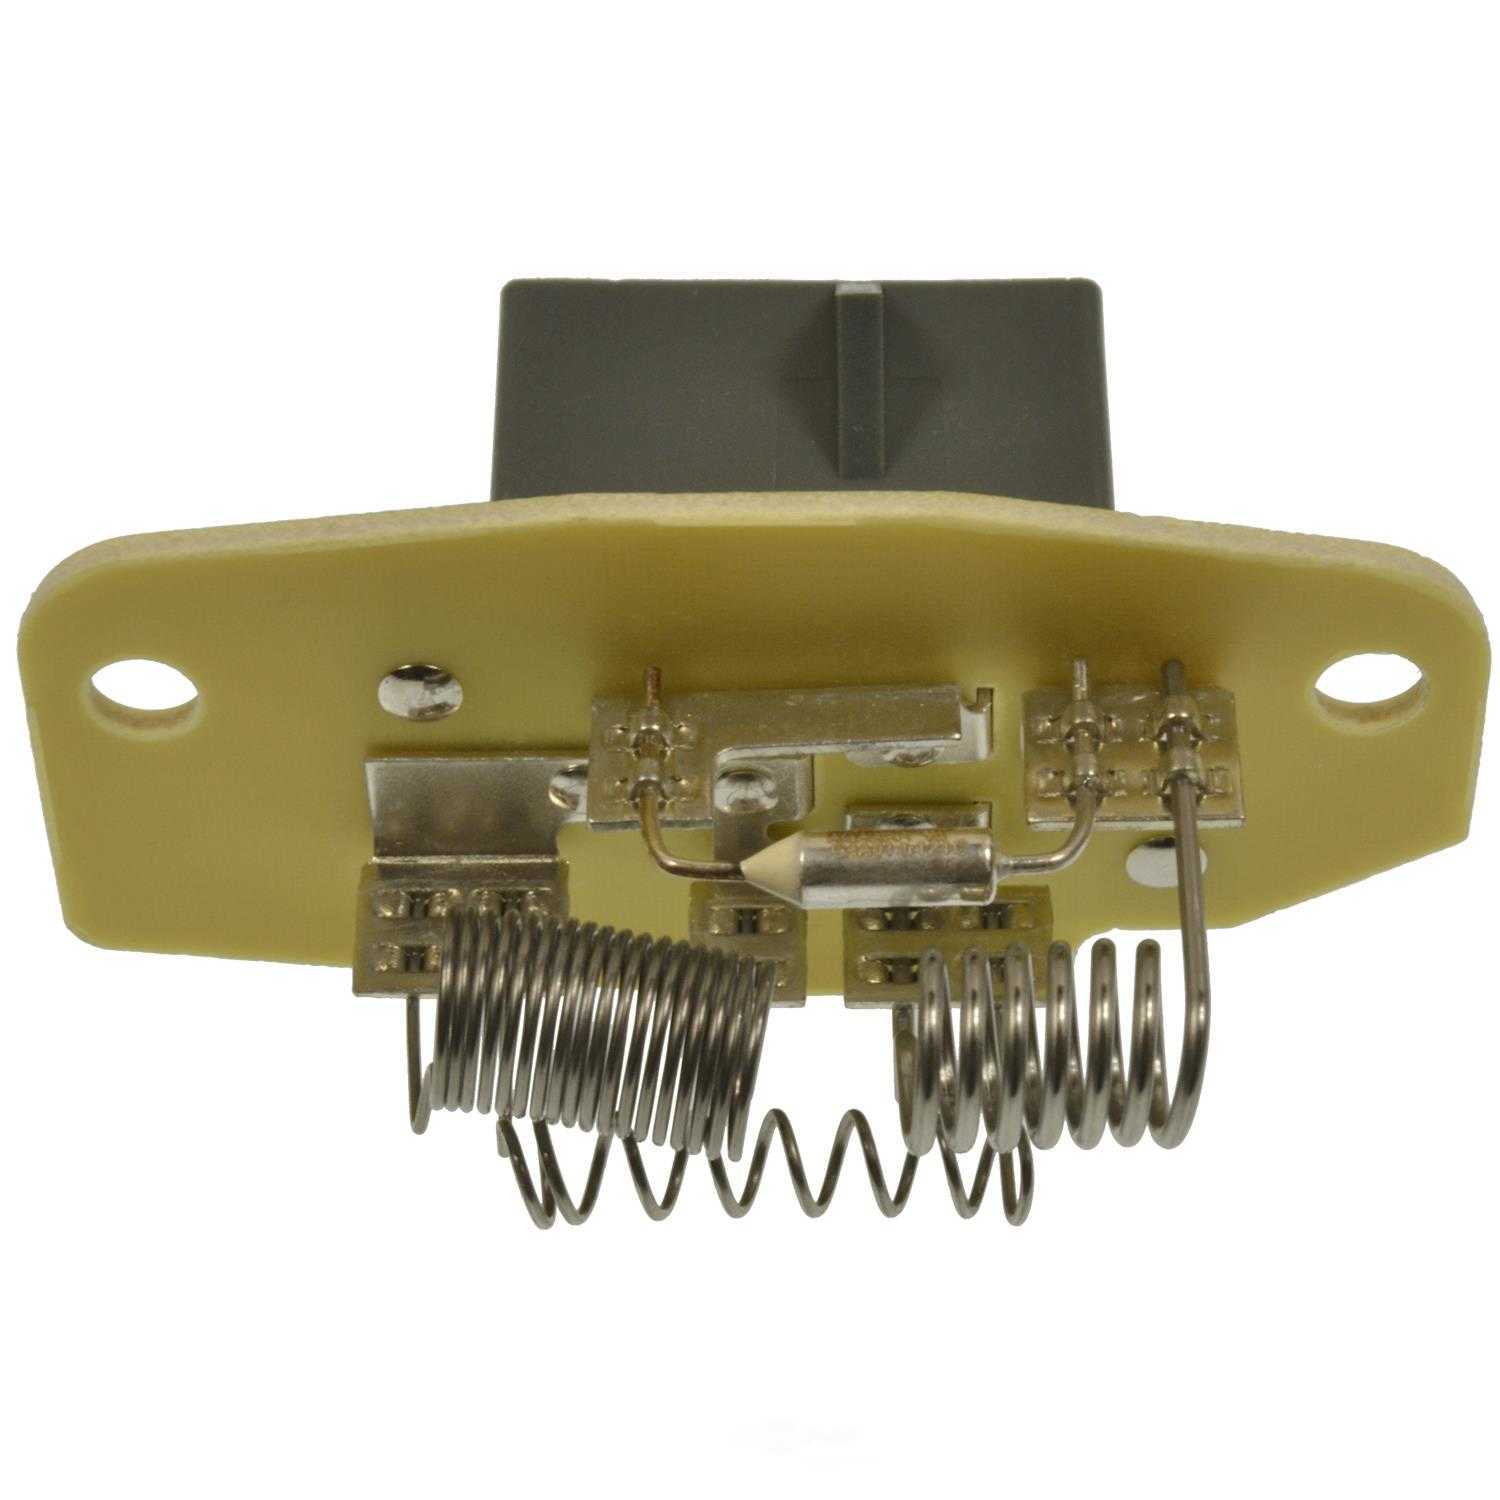 1994 Ford Explorer HVAC Blower Motor Resistor Kit Standard Motor Products  RU318HTK